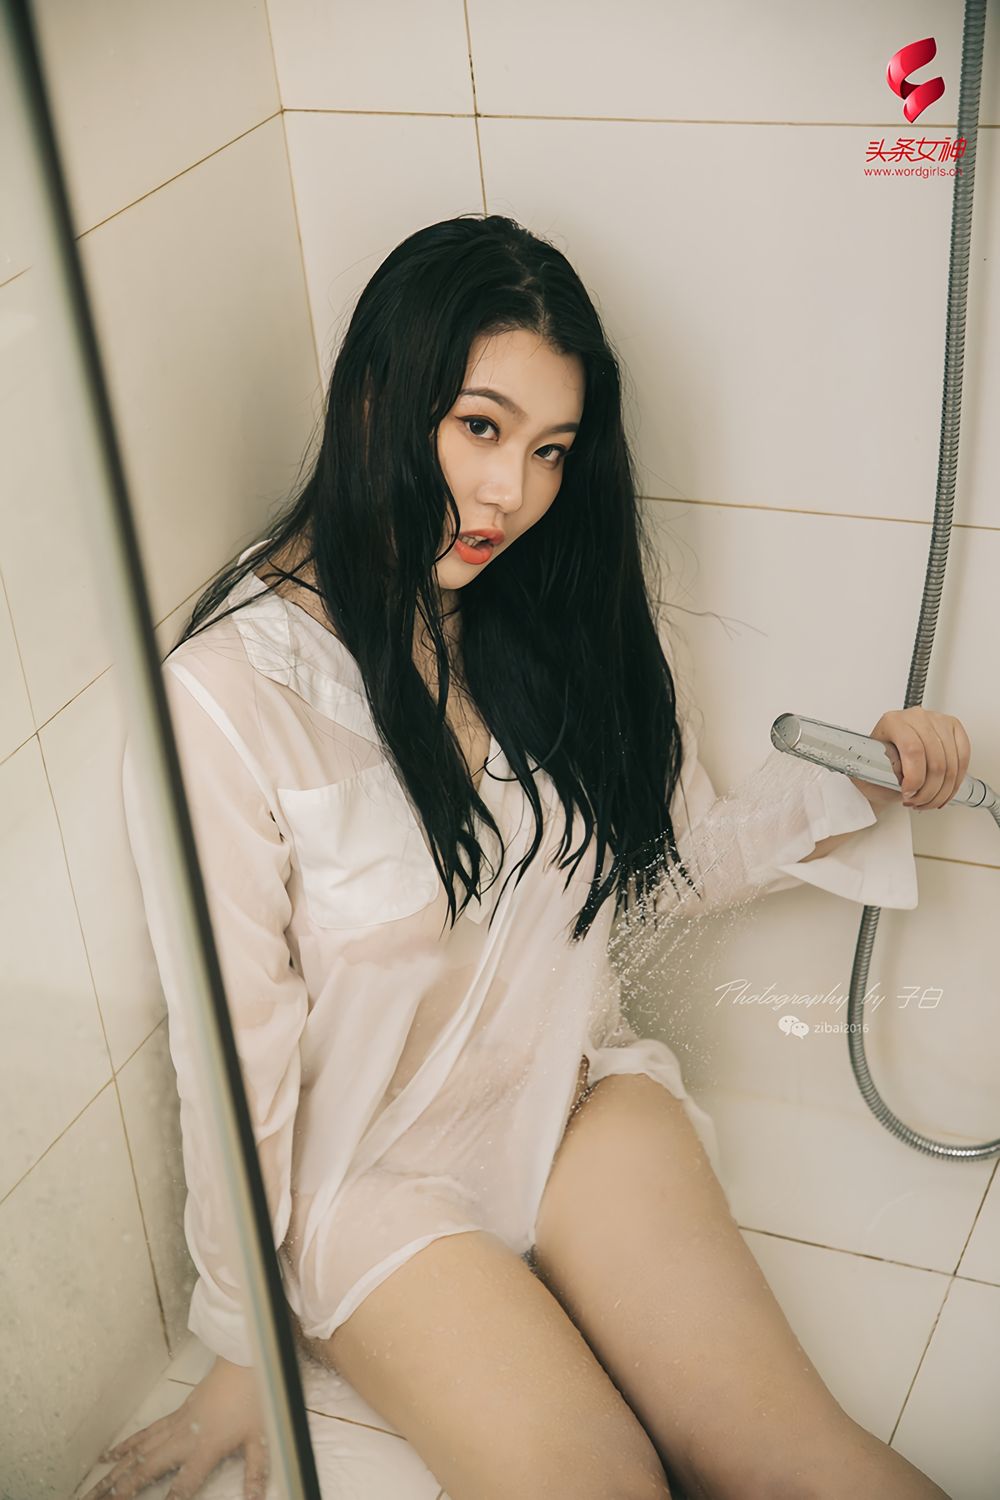 [TouTiao Girls] 2019.06.25 Sexy Portraits of Mature Style